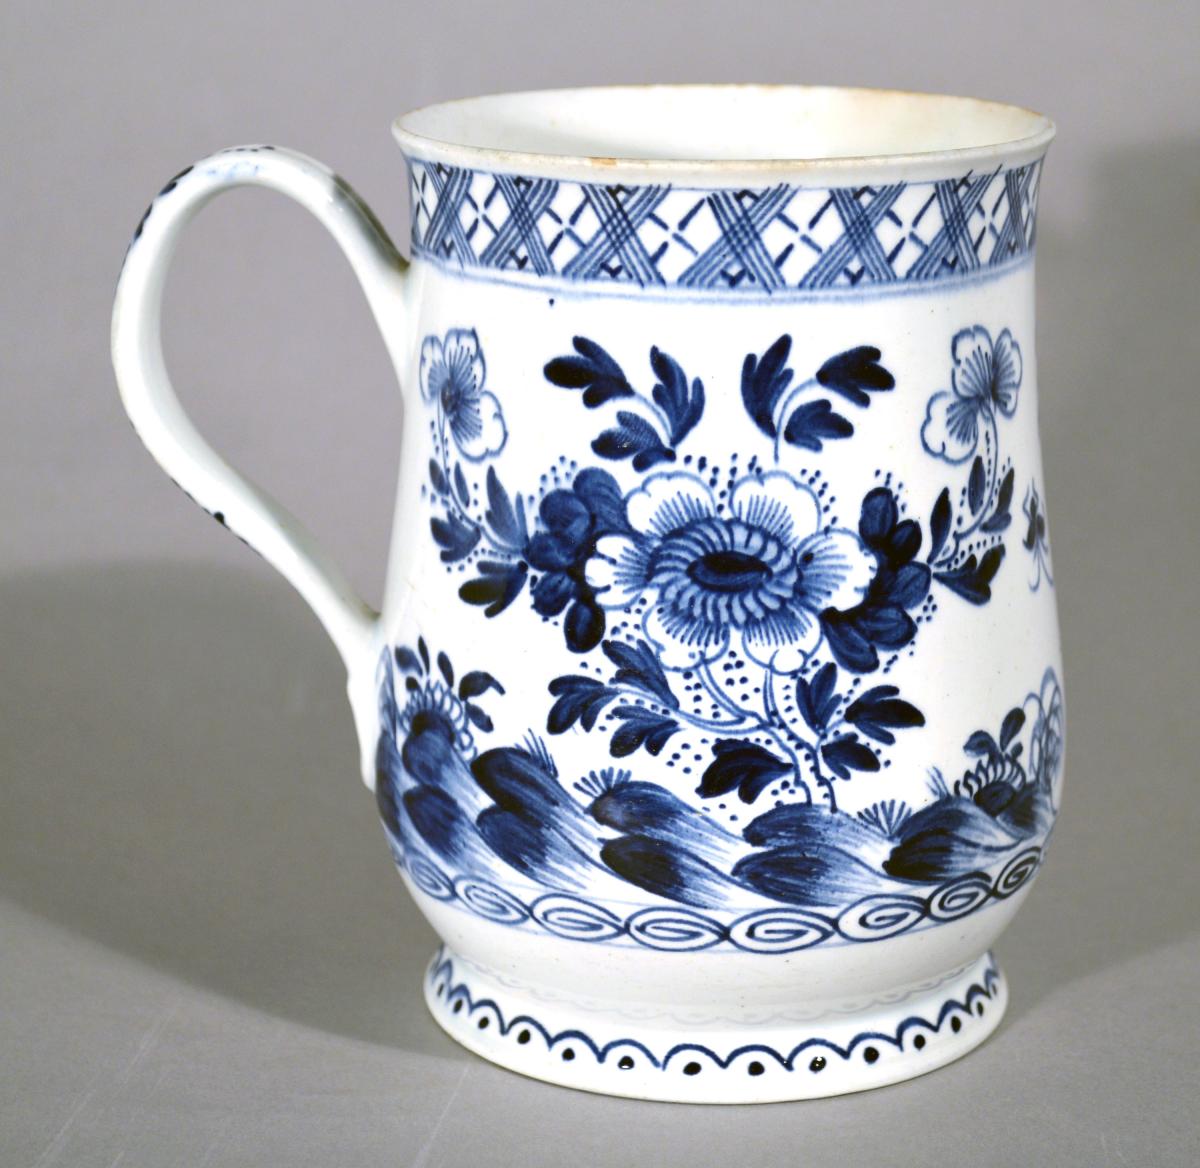 Antique English Bow Porcelain Underglaze Blue Baluster Tankard, Circa 1760-70.